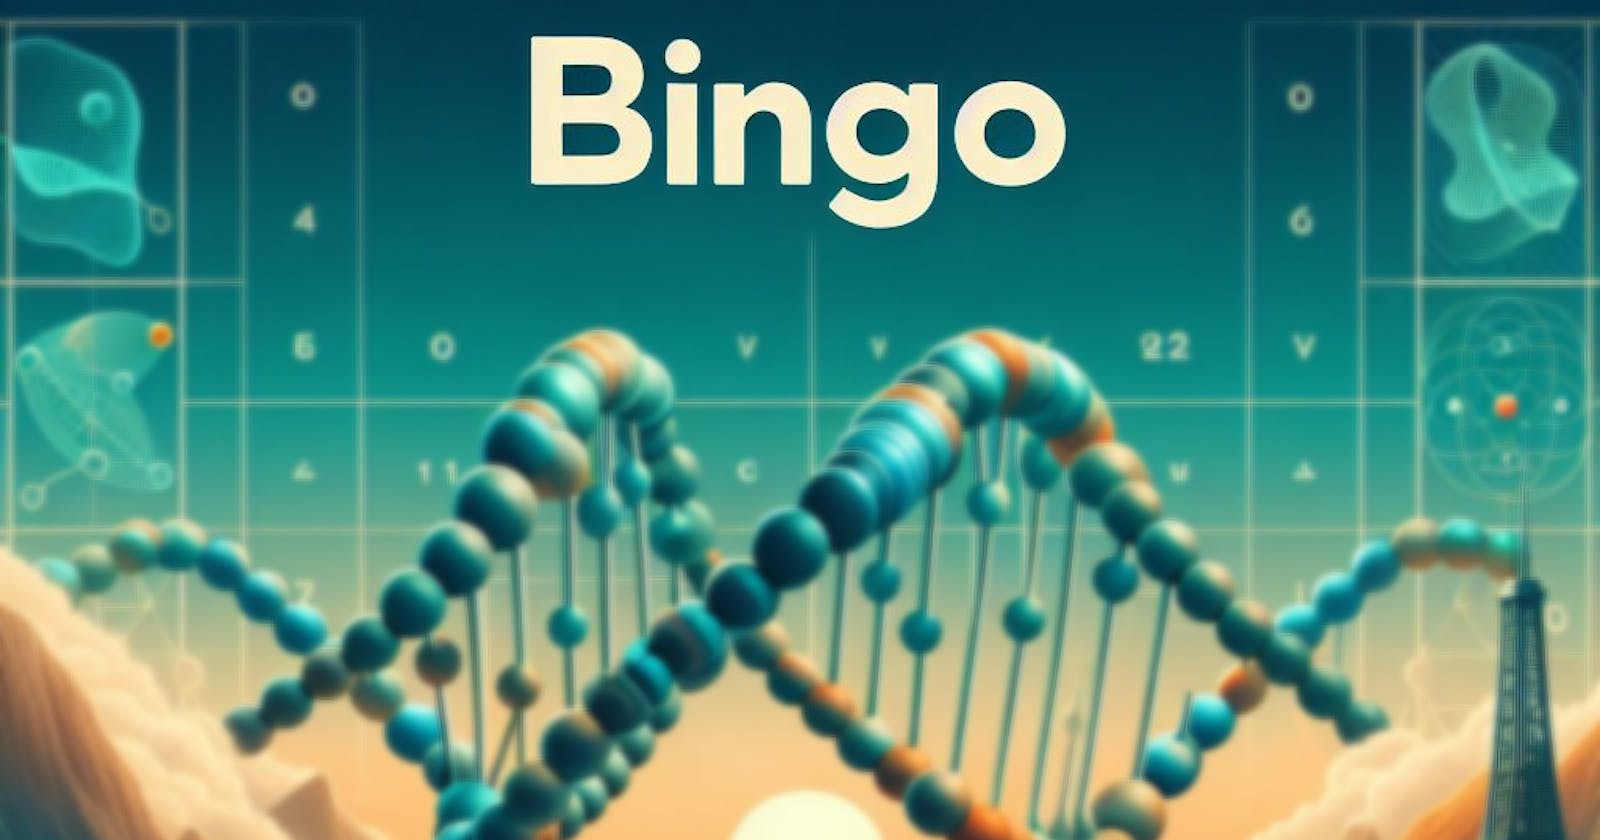 'Bingo' for Predicting Essential Genes from Protein Data